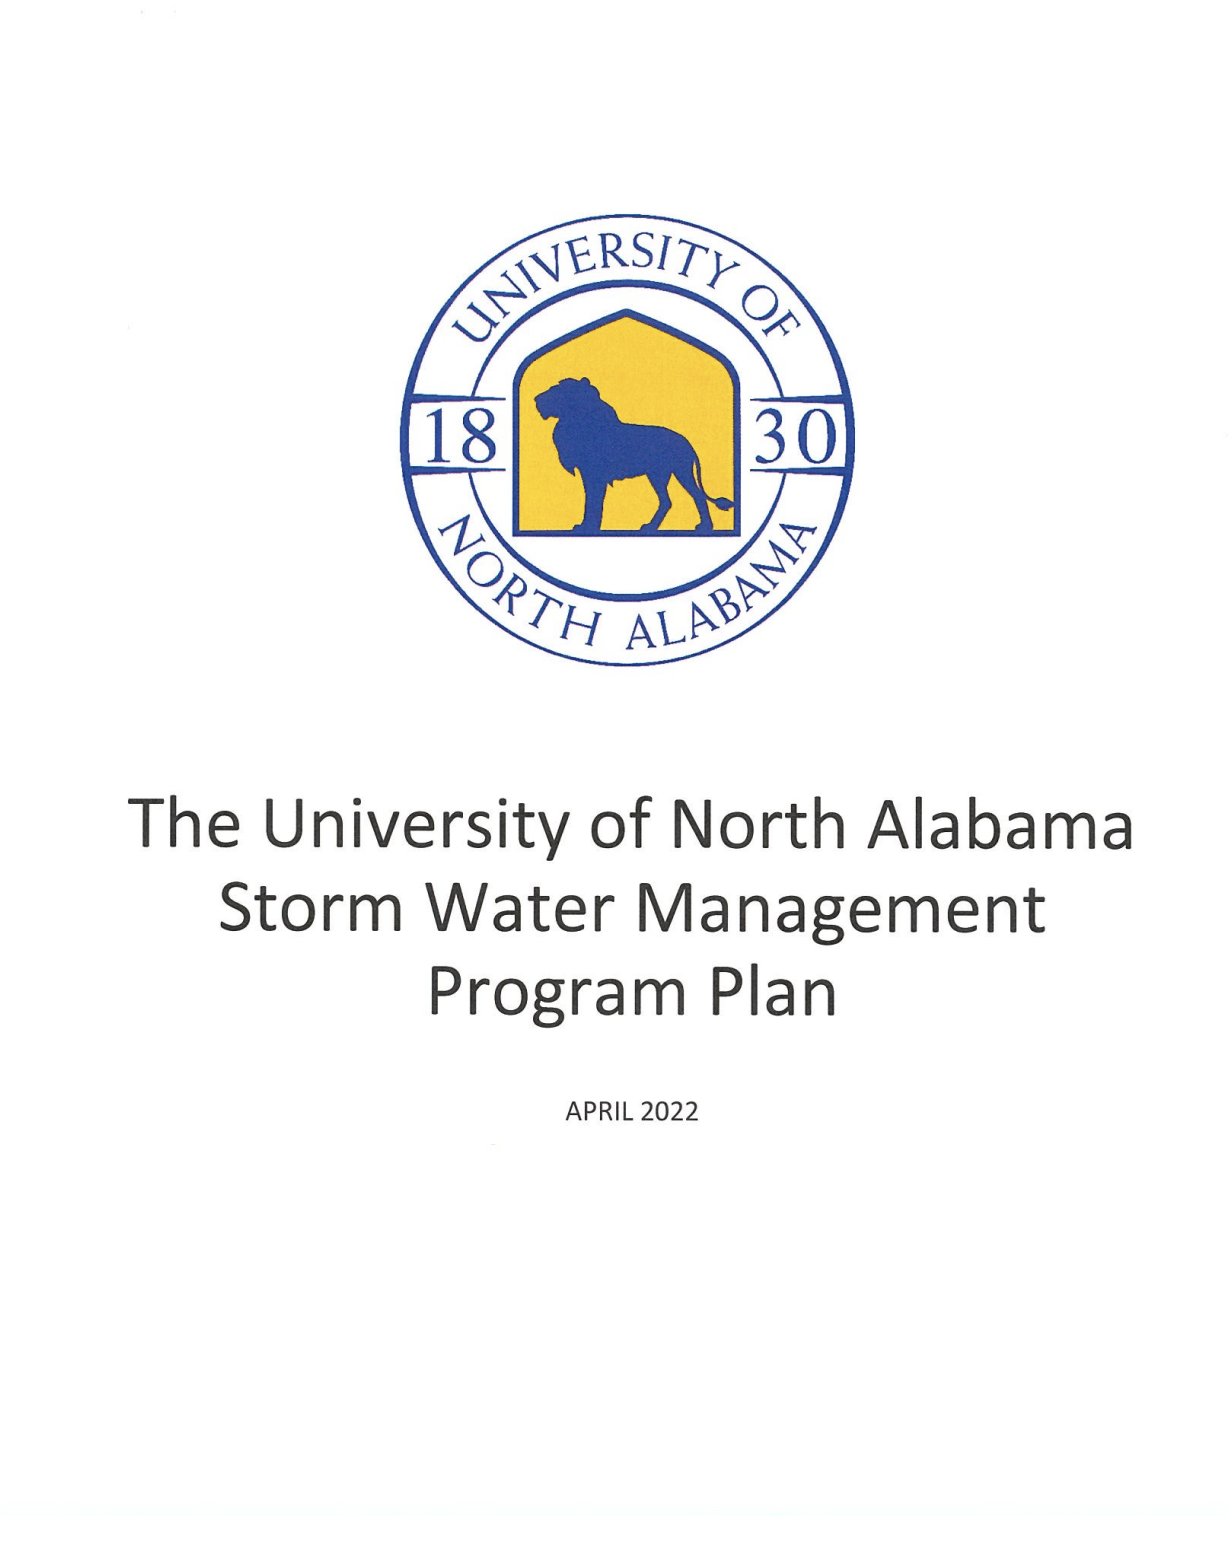 Storm Water Management Program Plan